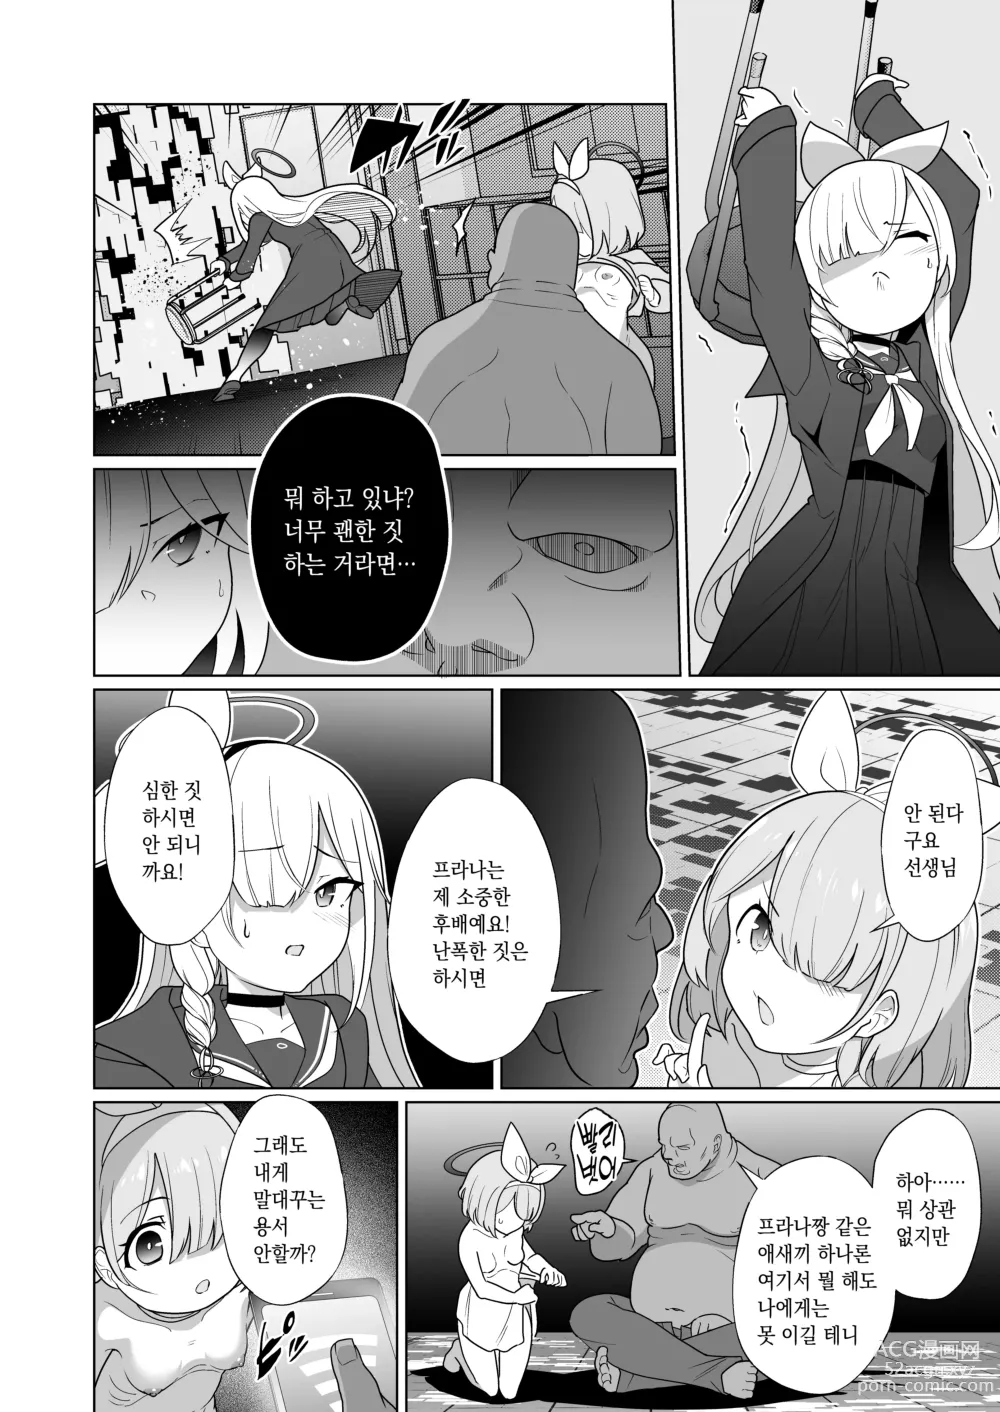 Page 7 of doujinshi 싫어하는 프라나가 기꺼이 봉사하는 이야기